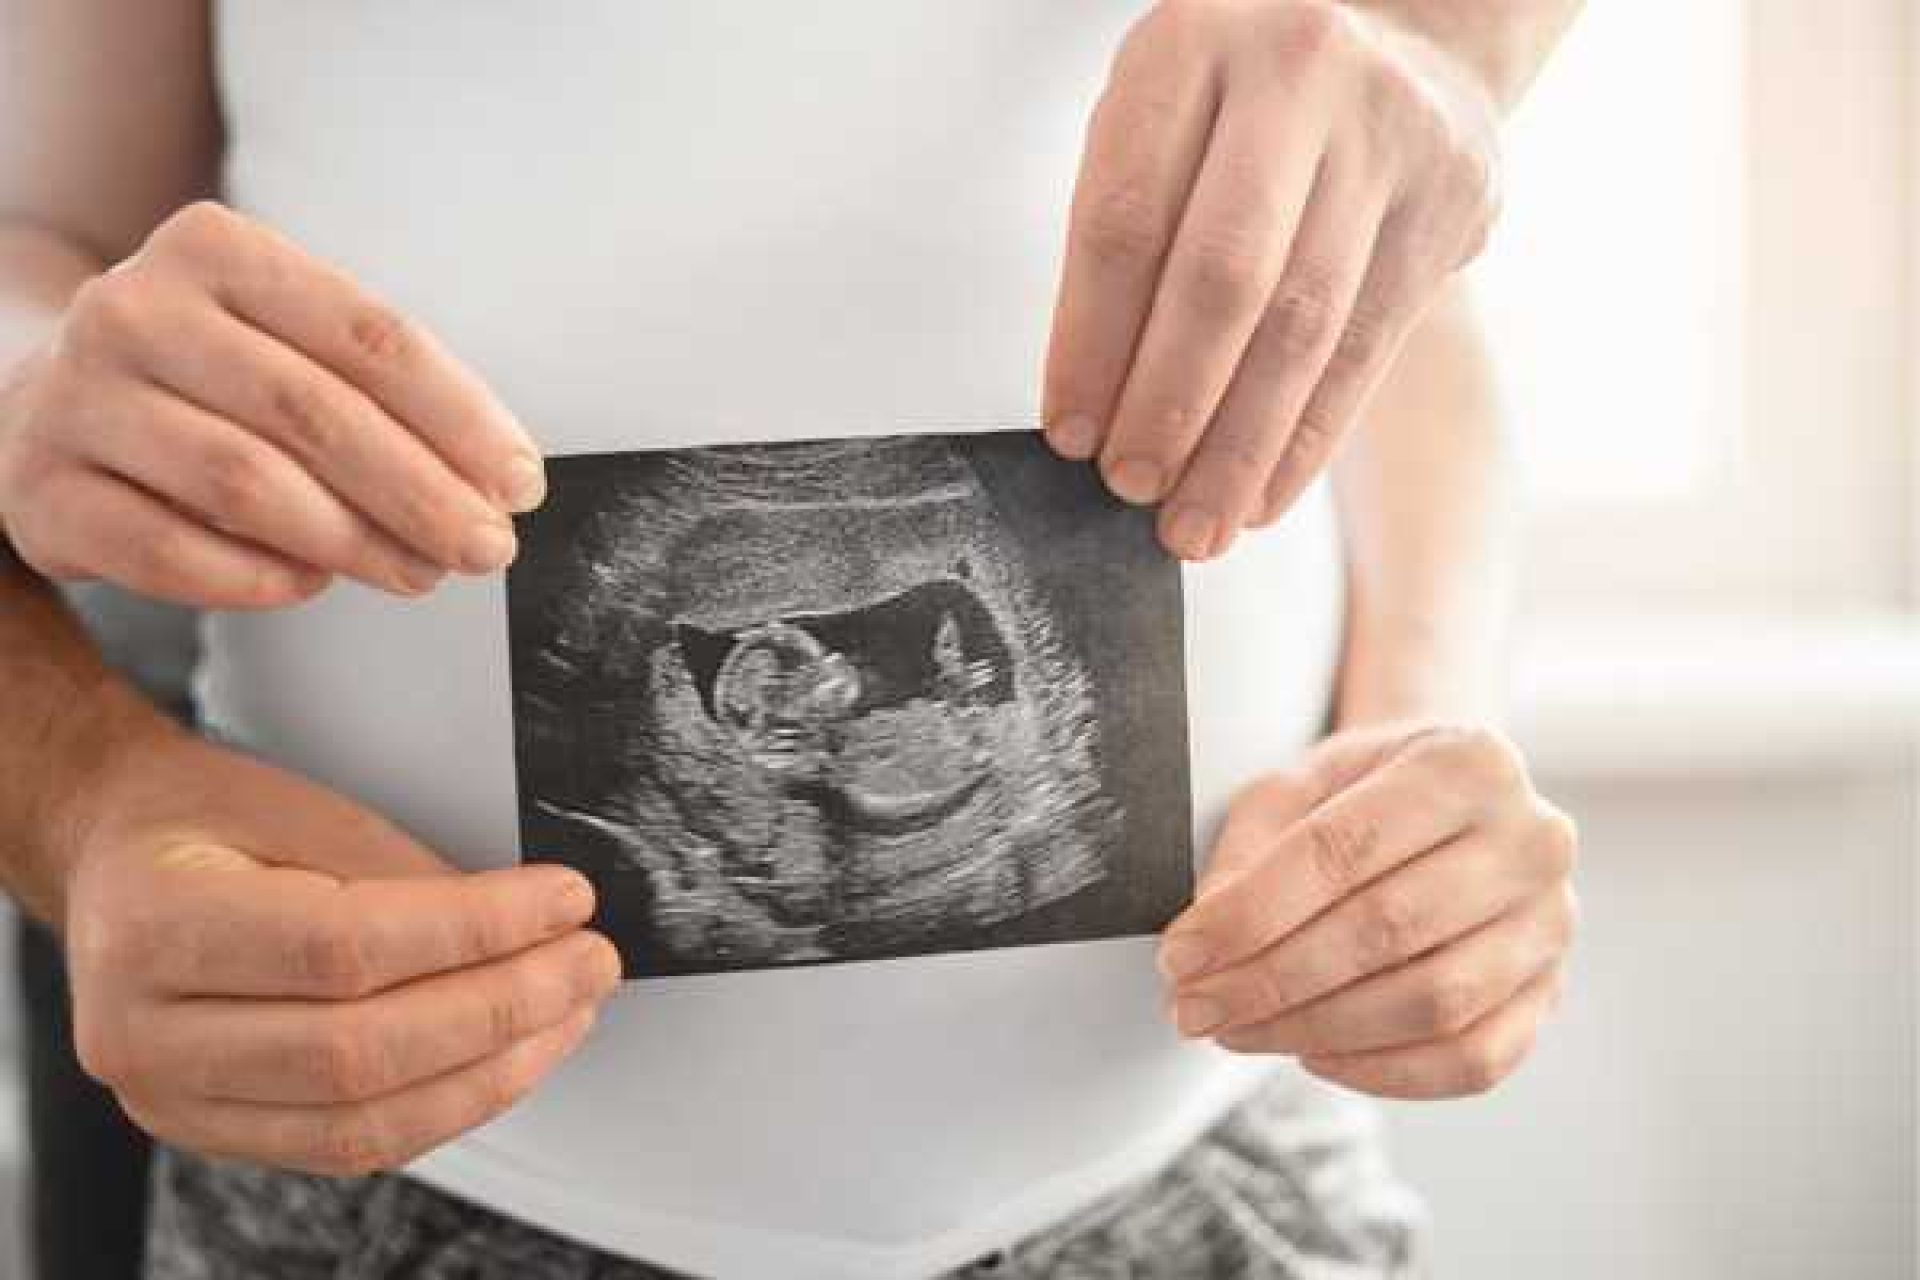 Fertility supplements you should AVOID